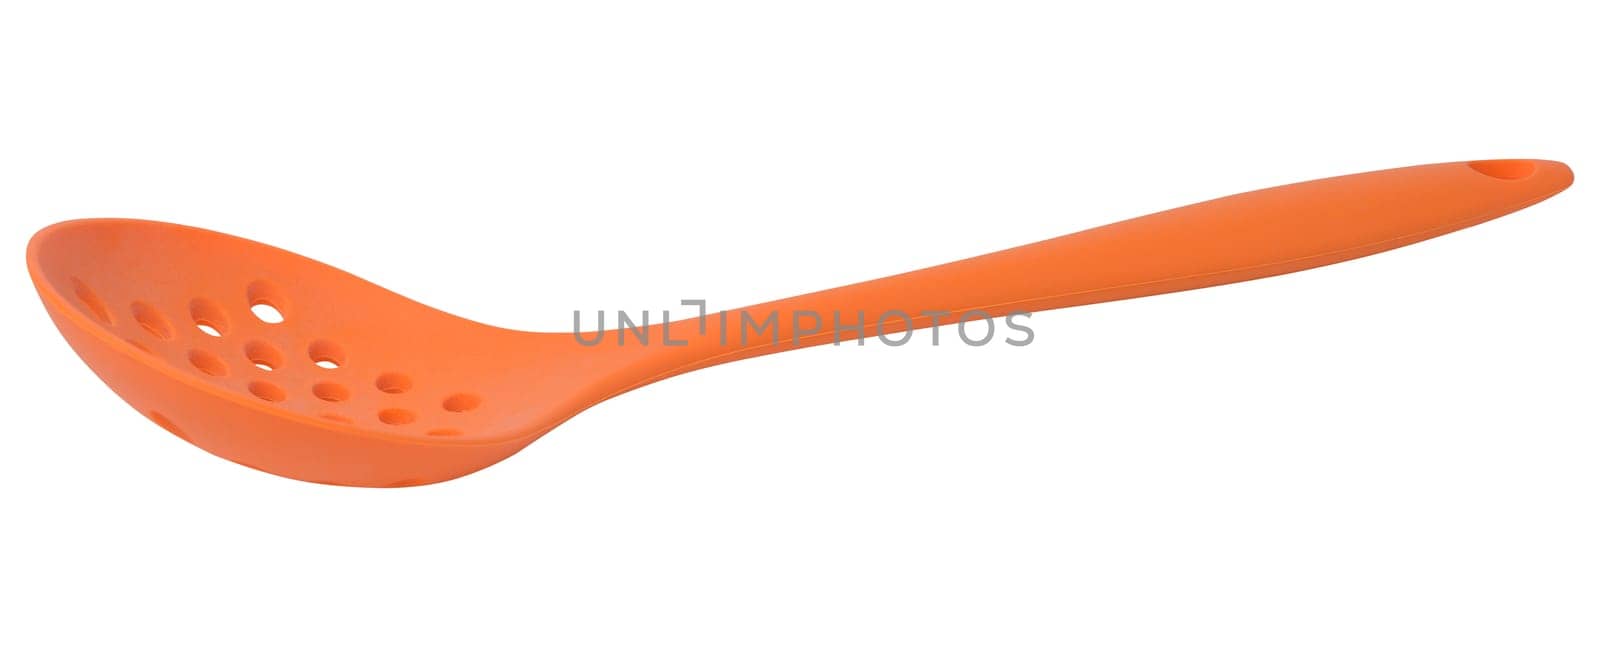 Orange plastic kitchen slotted spoon on white isolated background